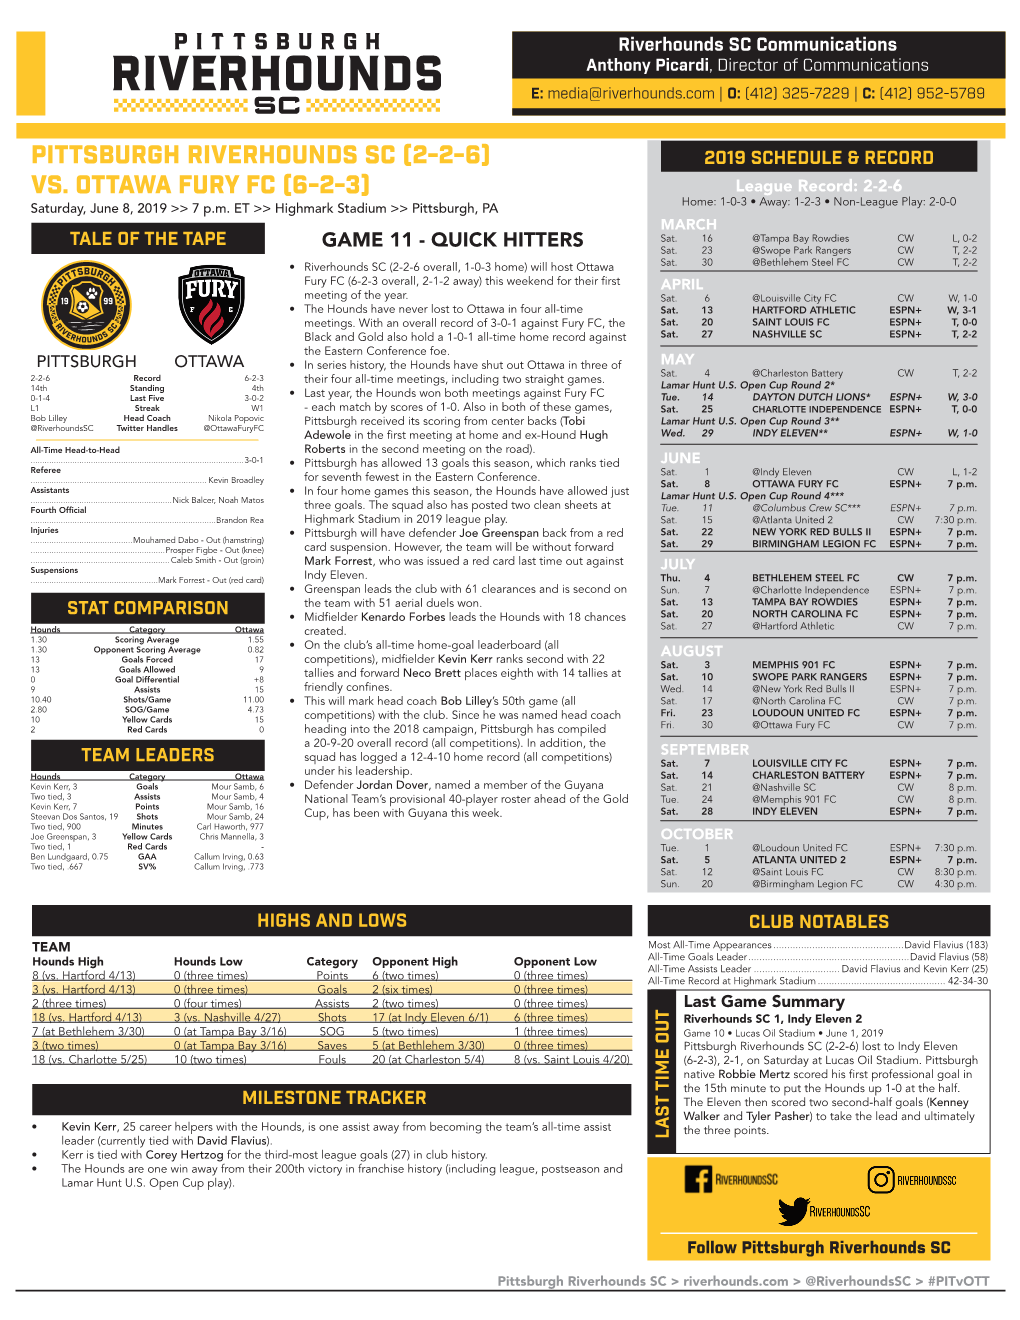 Pittsburgh Riverhounds Sc (2-2-6) 2019 Schedule & Record Vs